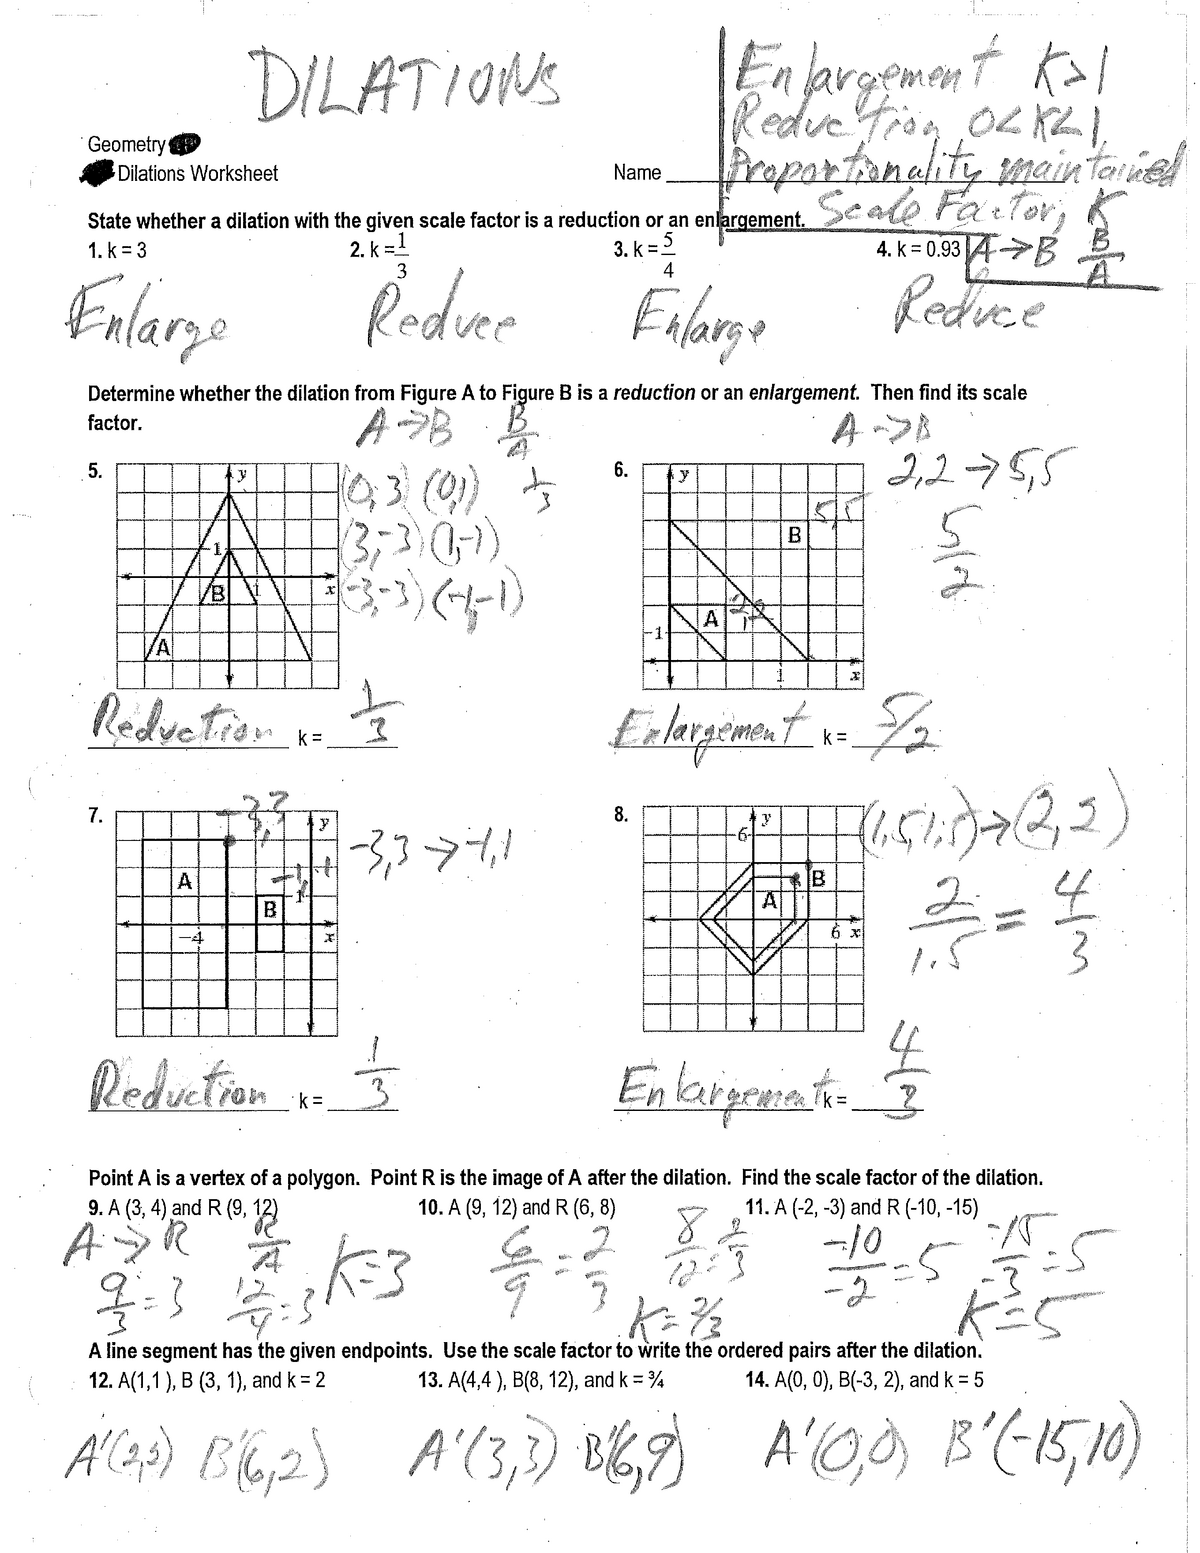 Dilations Worksheet Final KEY - GEO22 - Geometry - StuDocu In Dilations Worksheet With Answers